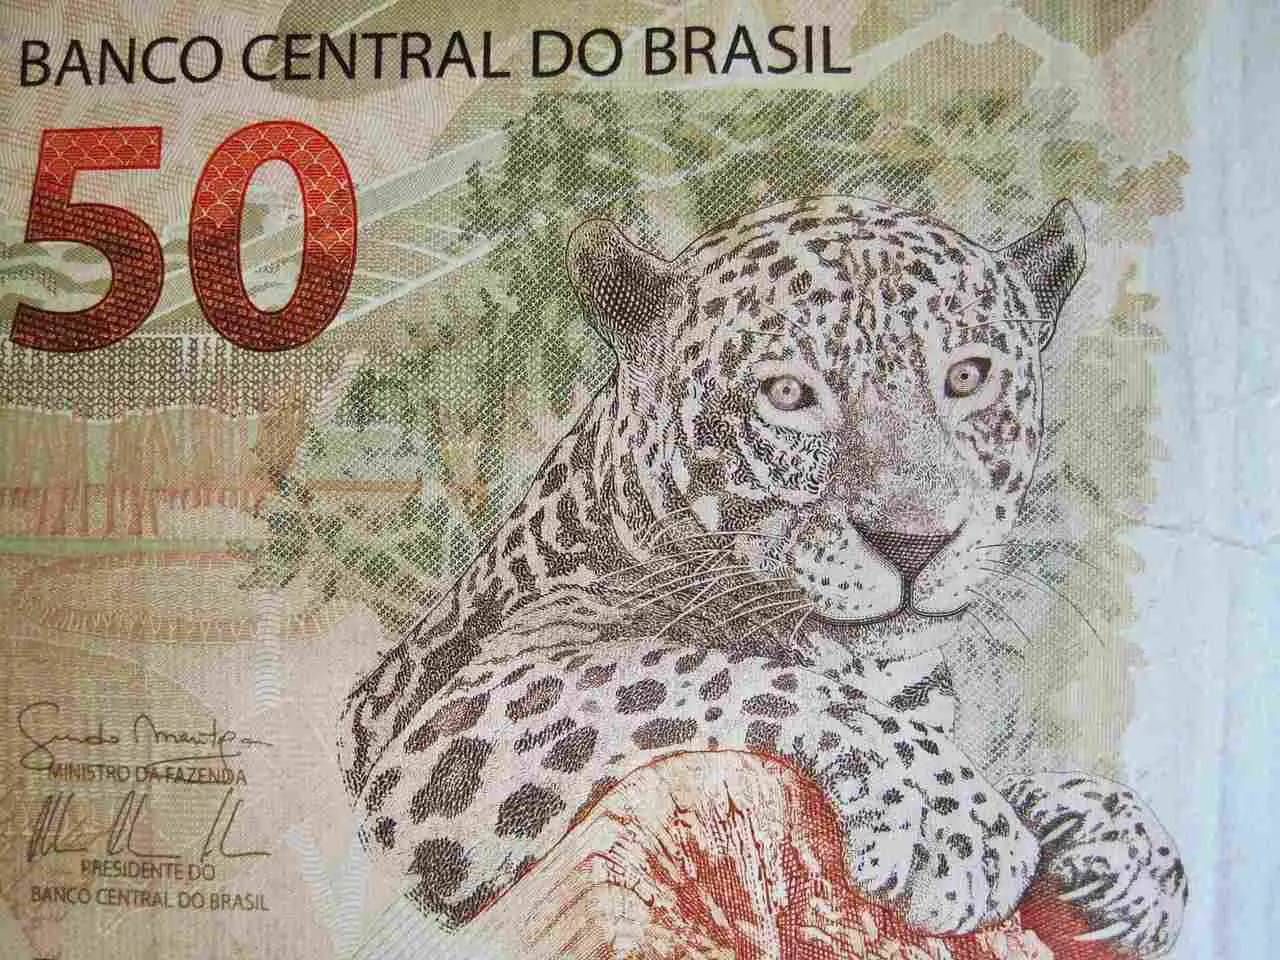 monnaie brésilienne